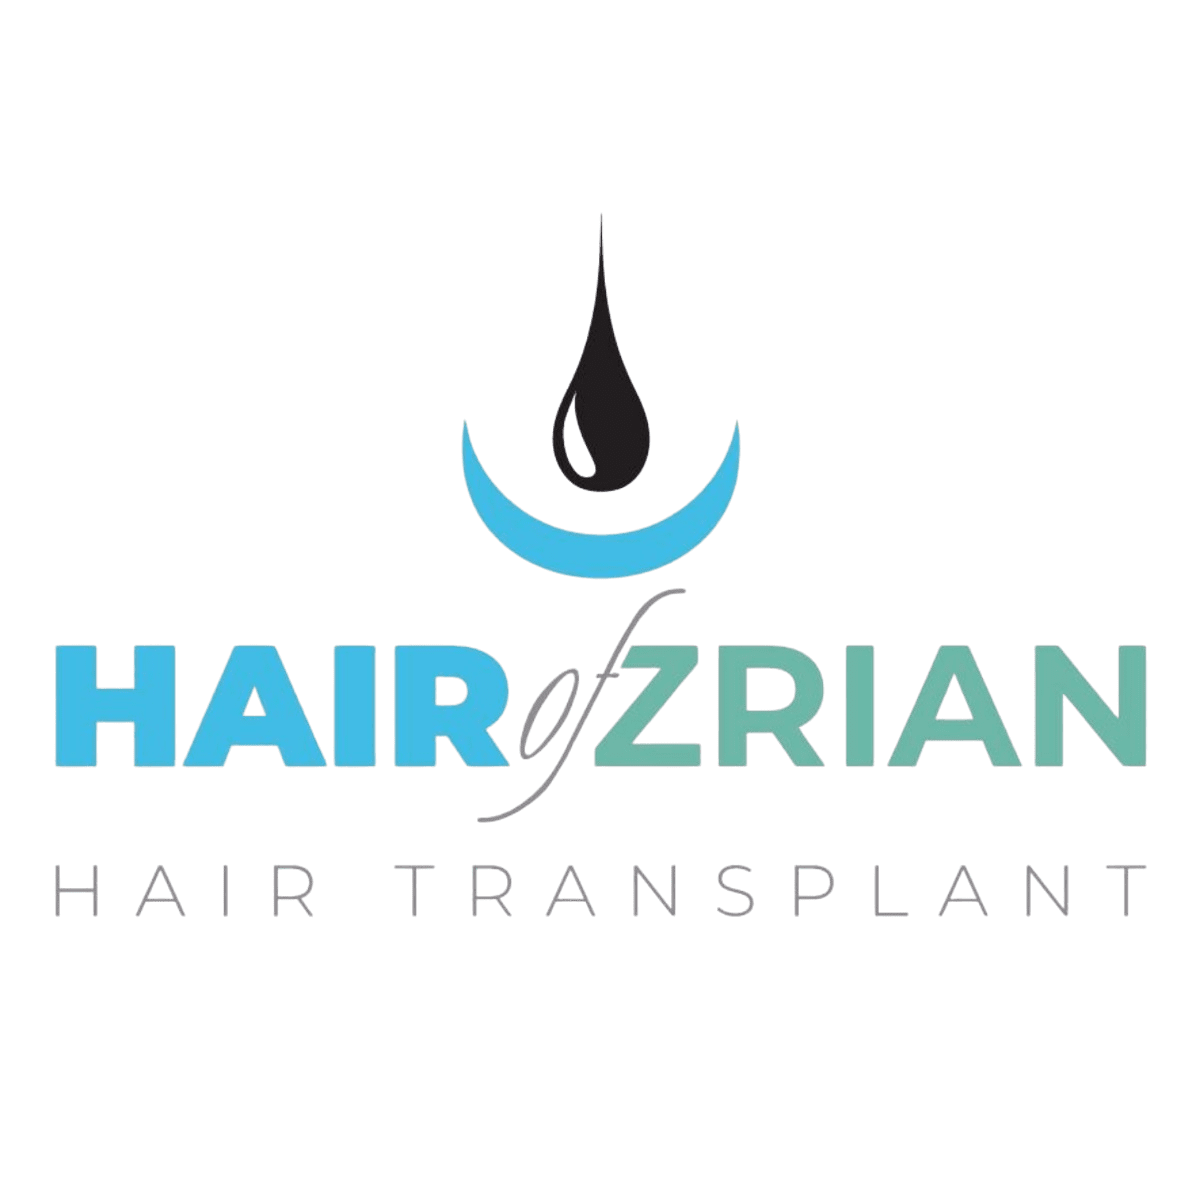 Hair of zrian logo